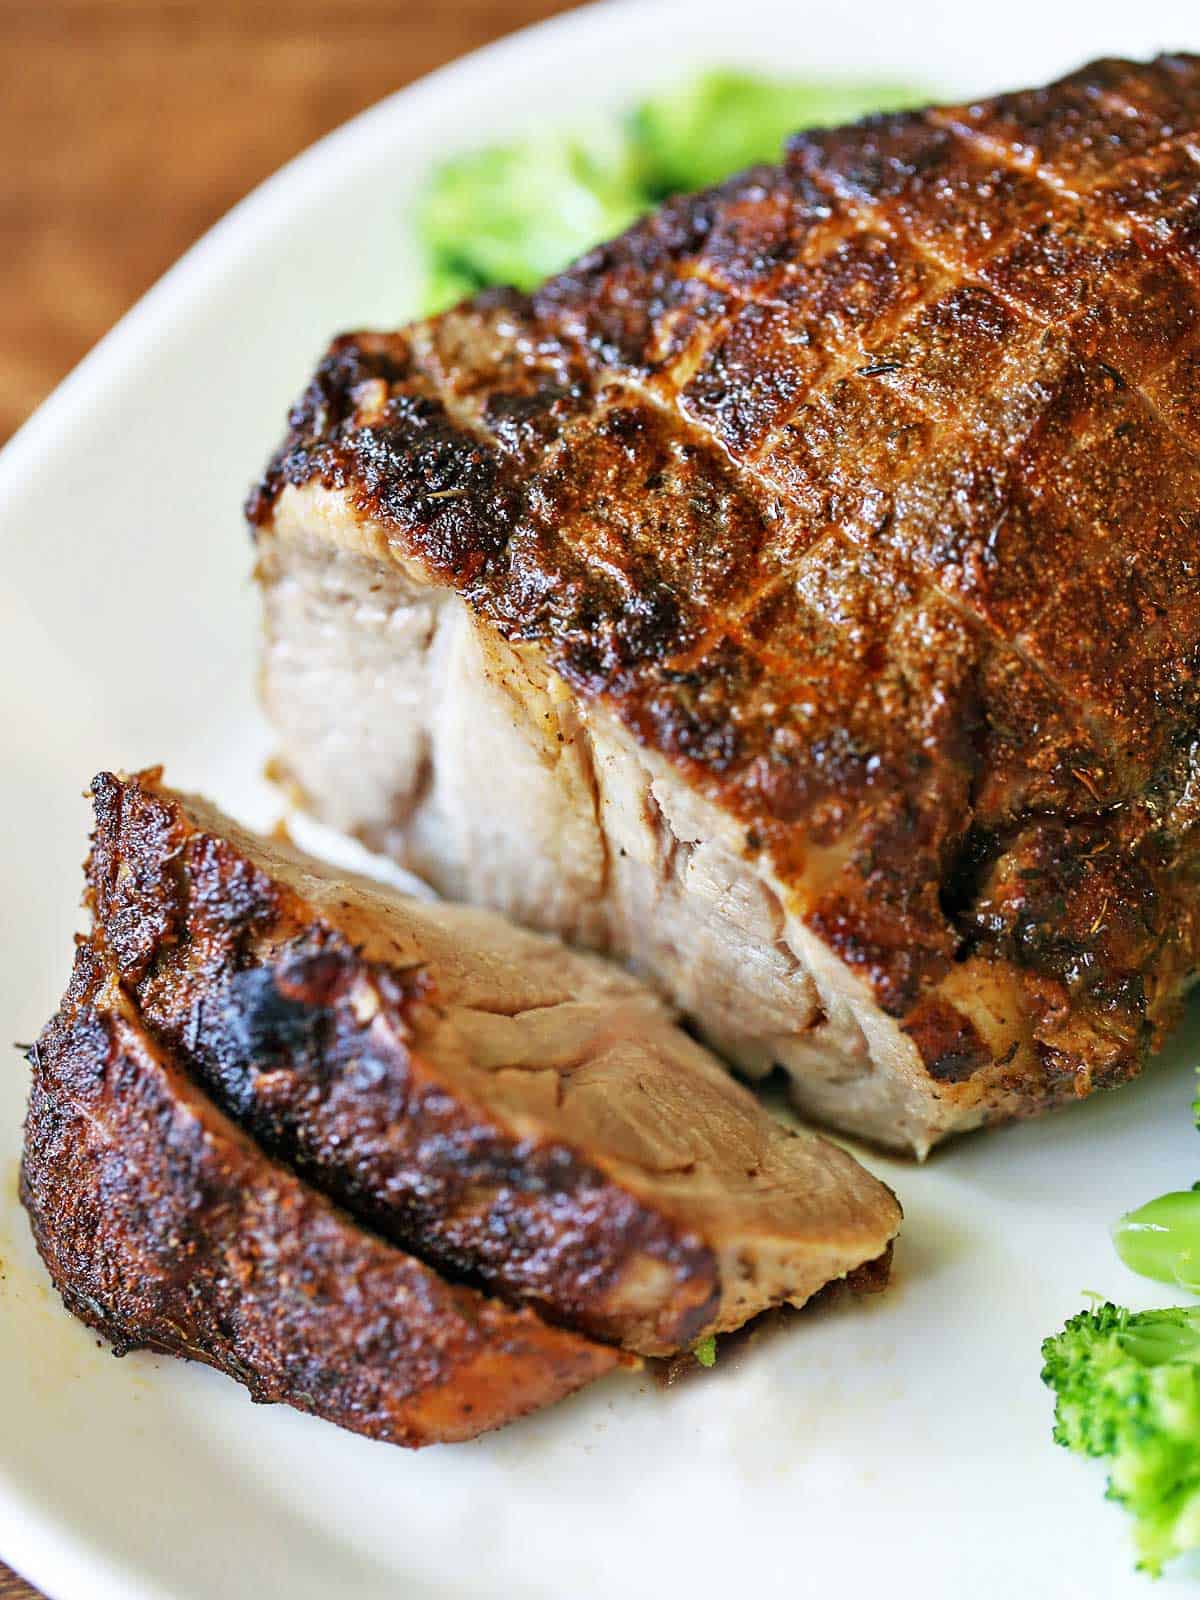 Pork roast served on a white platter with veggies.